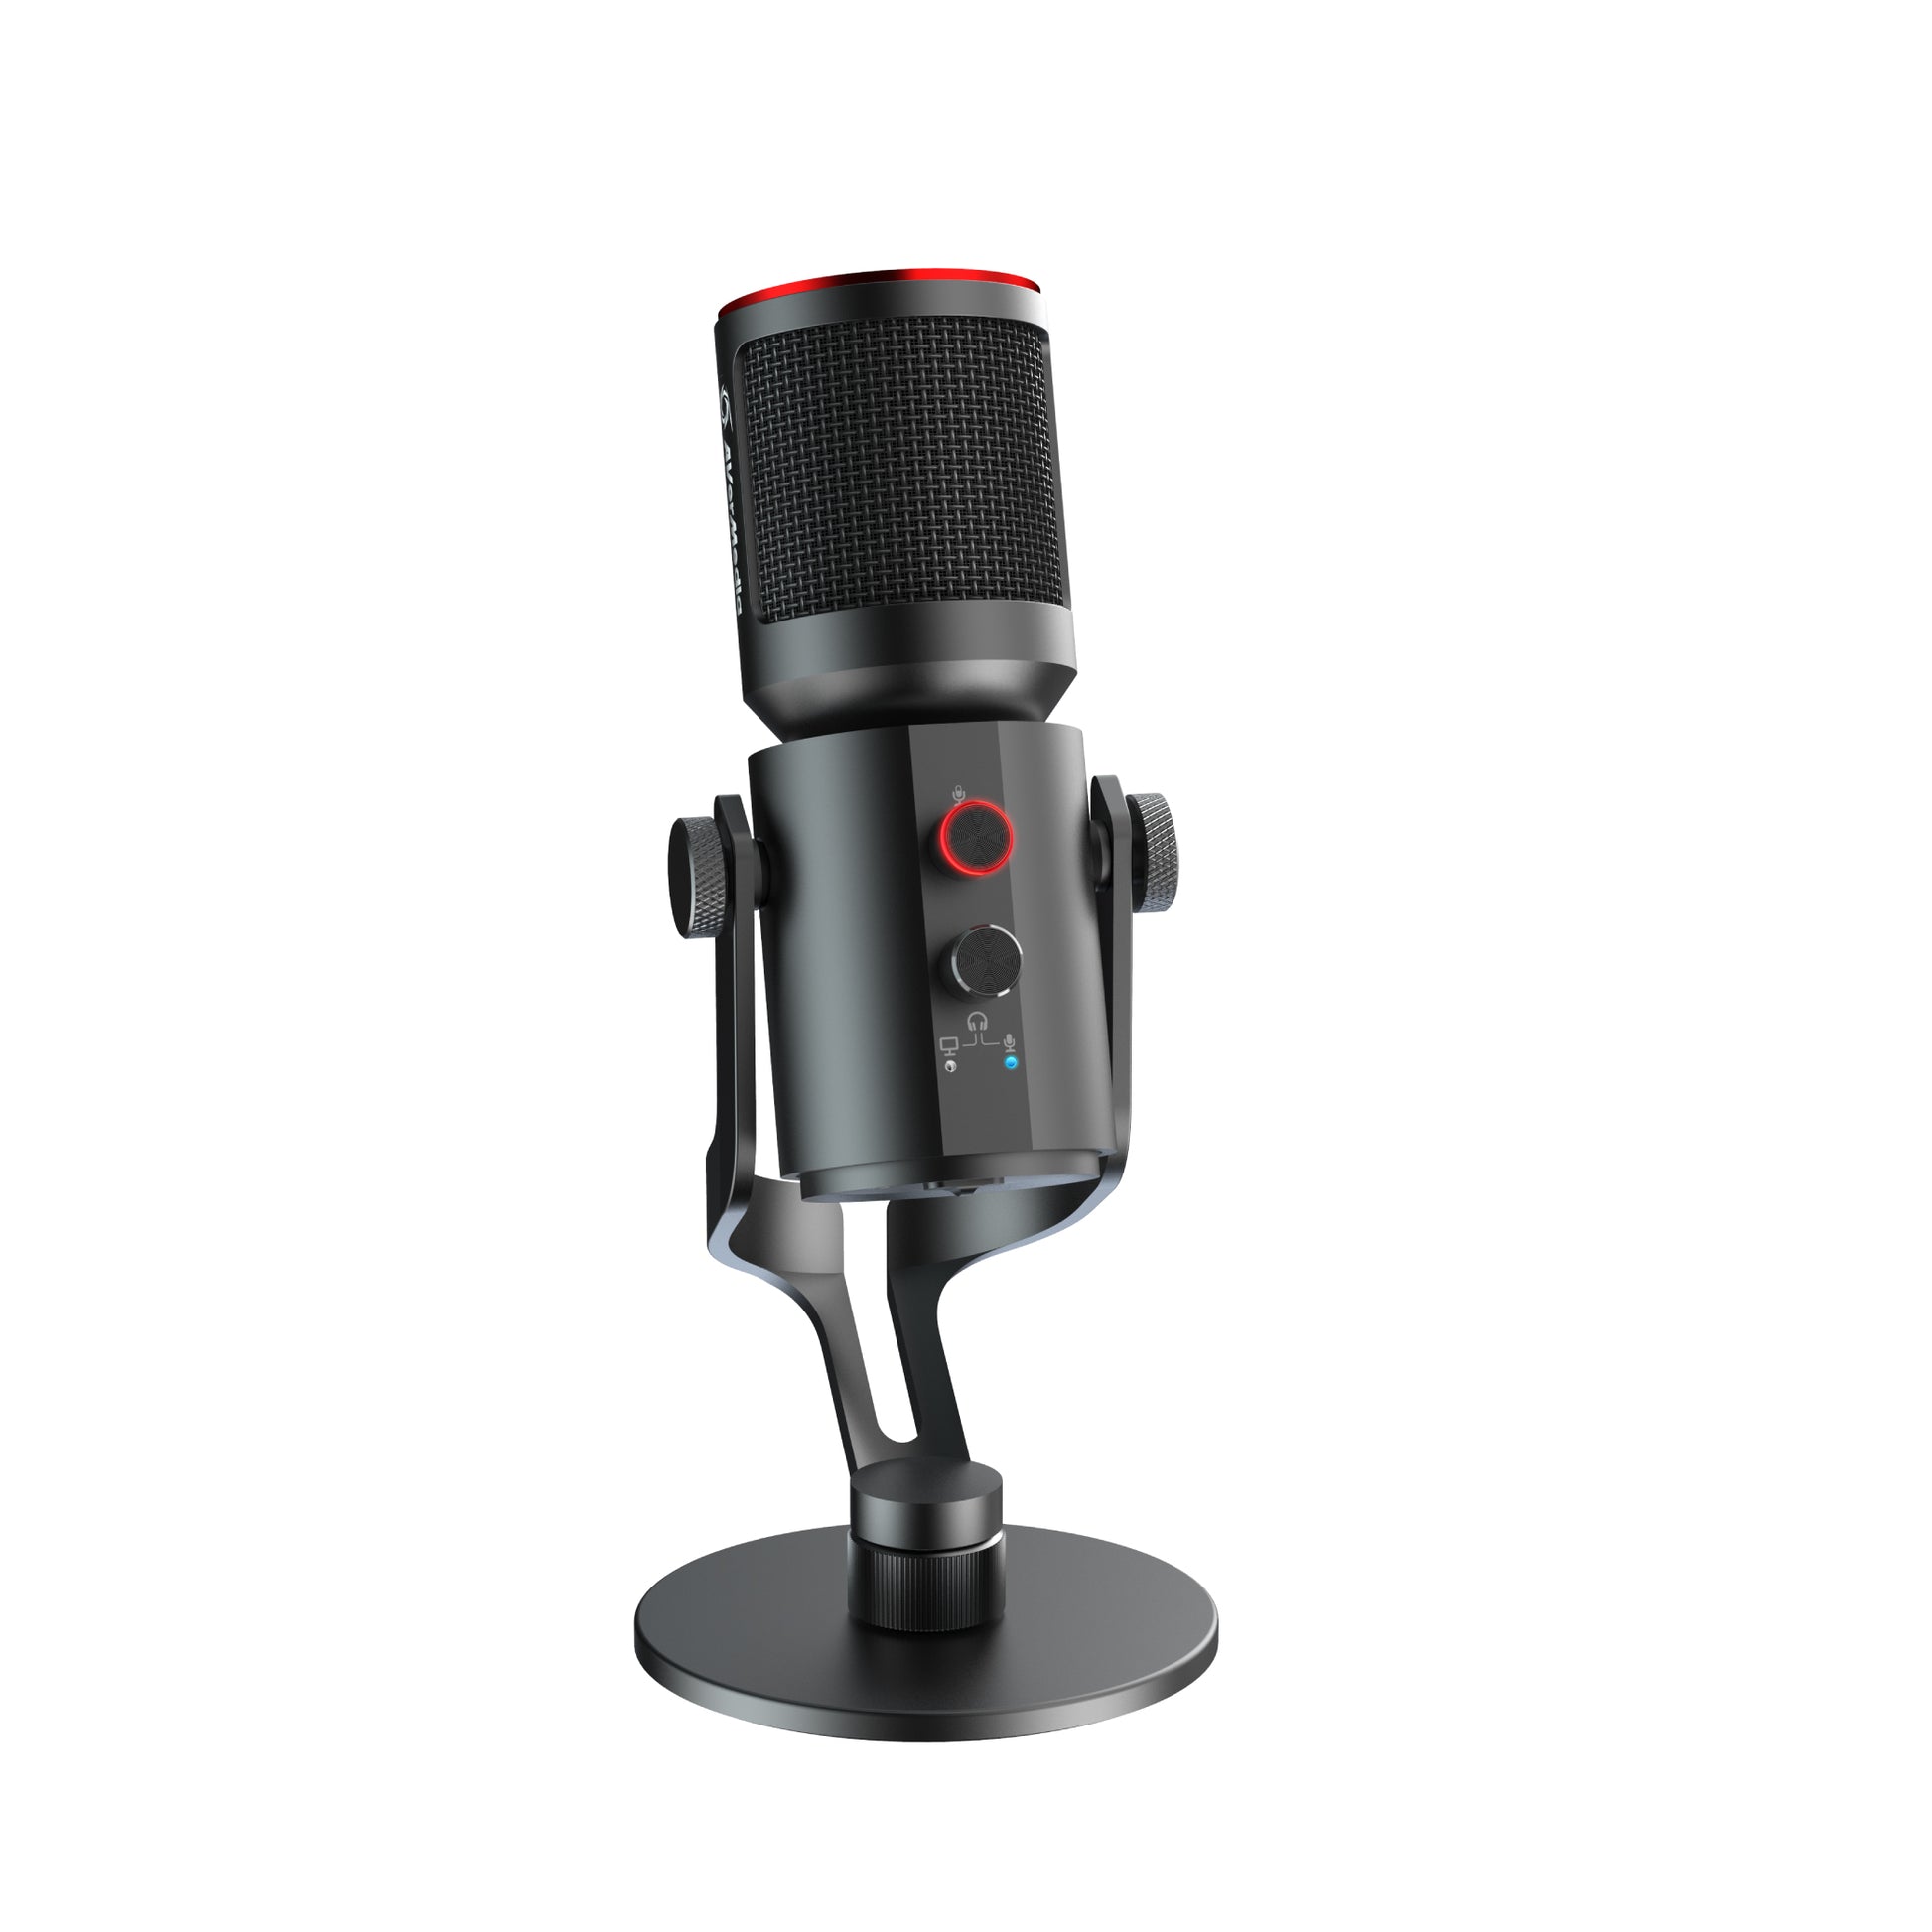 AVerMedia AVerMedia Edition] – AVerMedia Streamer Microphone Kit | Technologies Limited AM350 Live